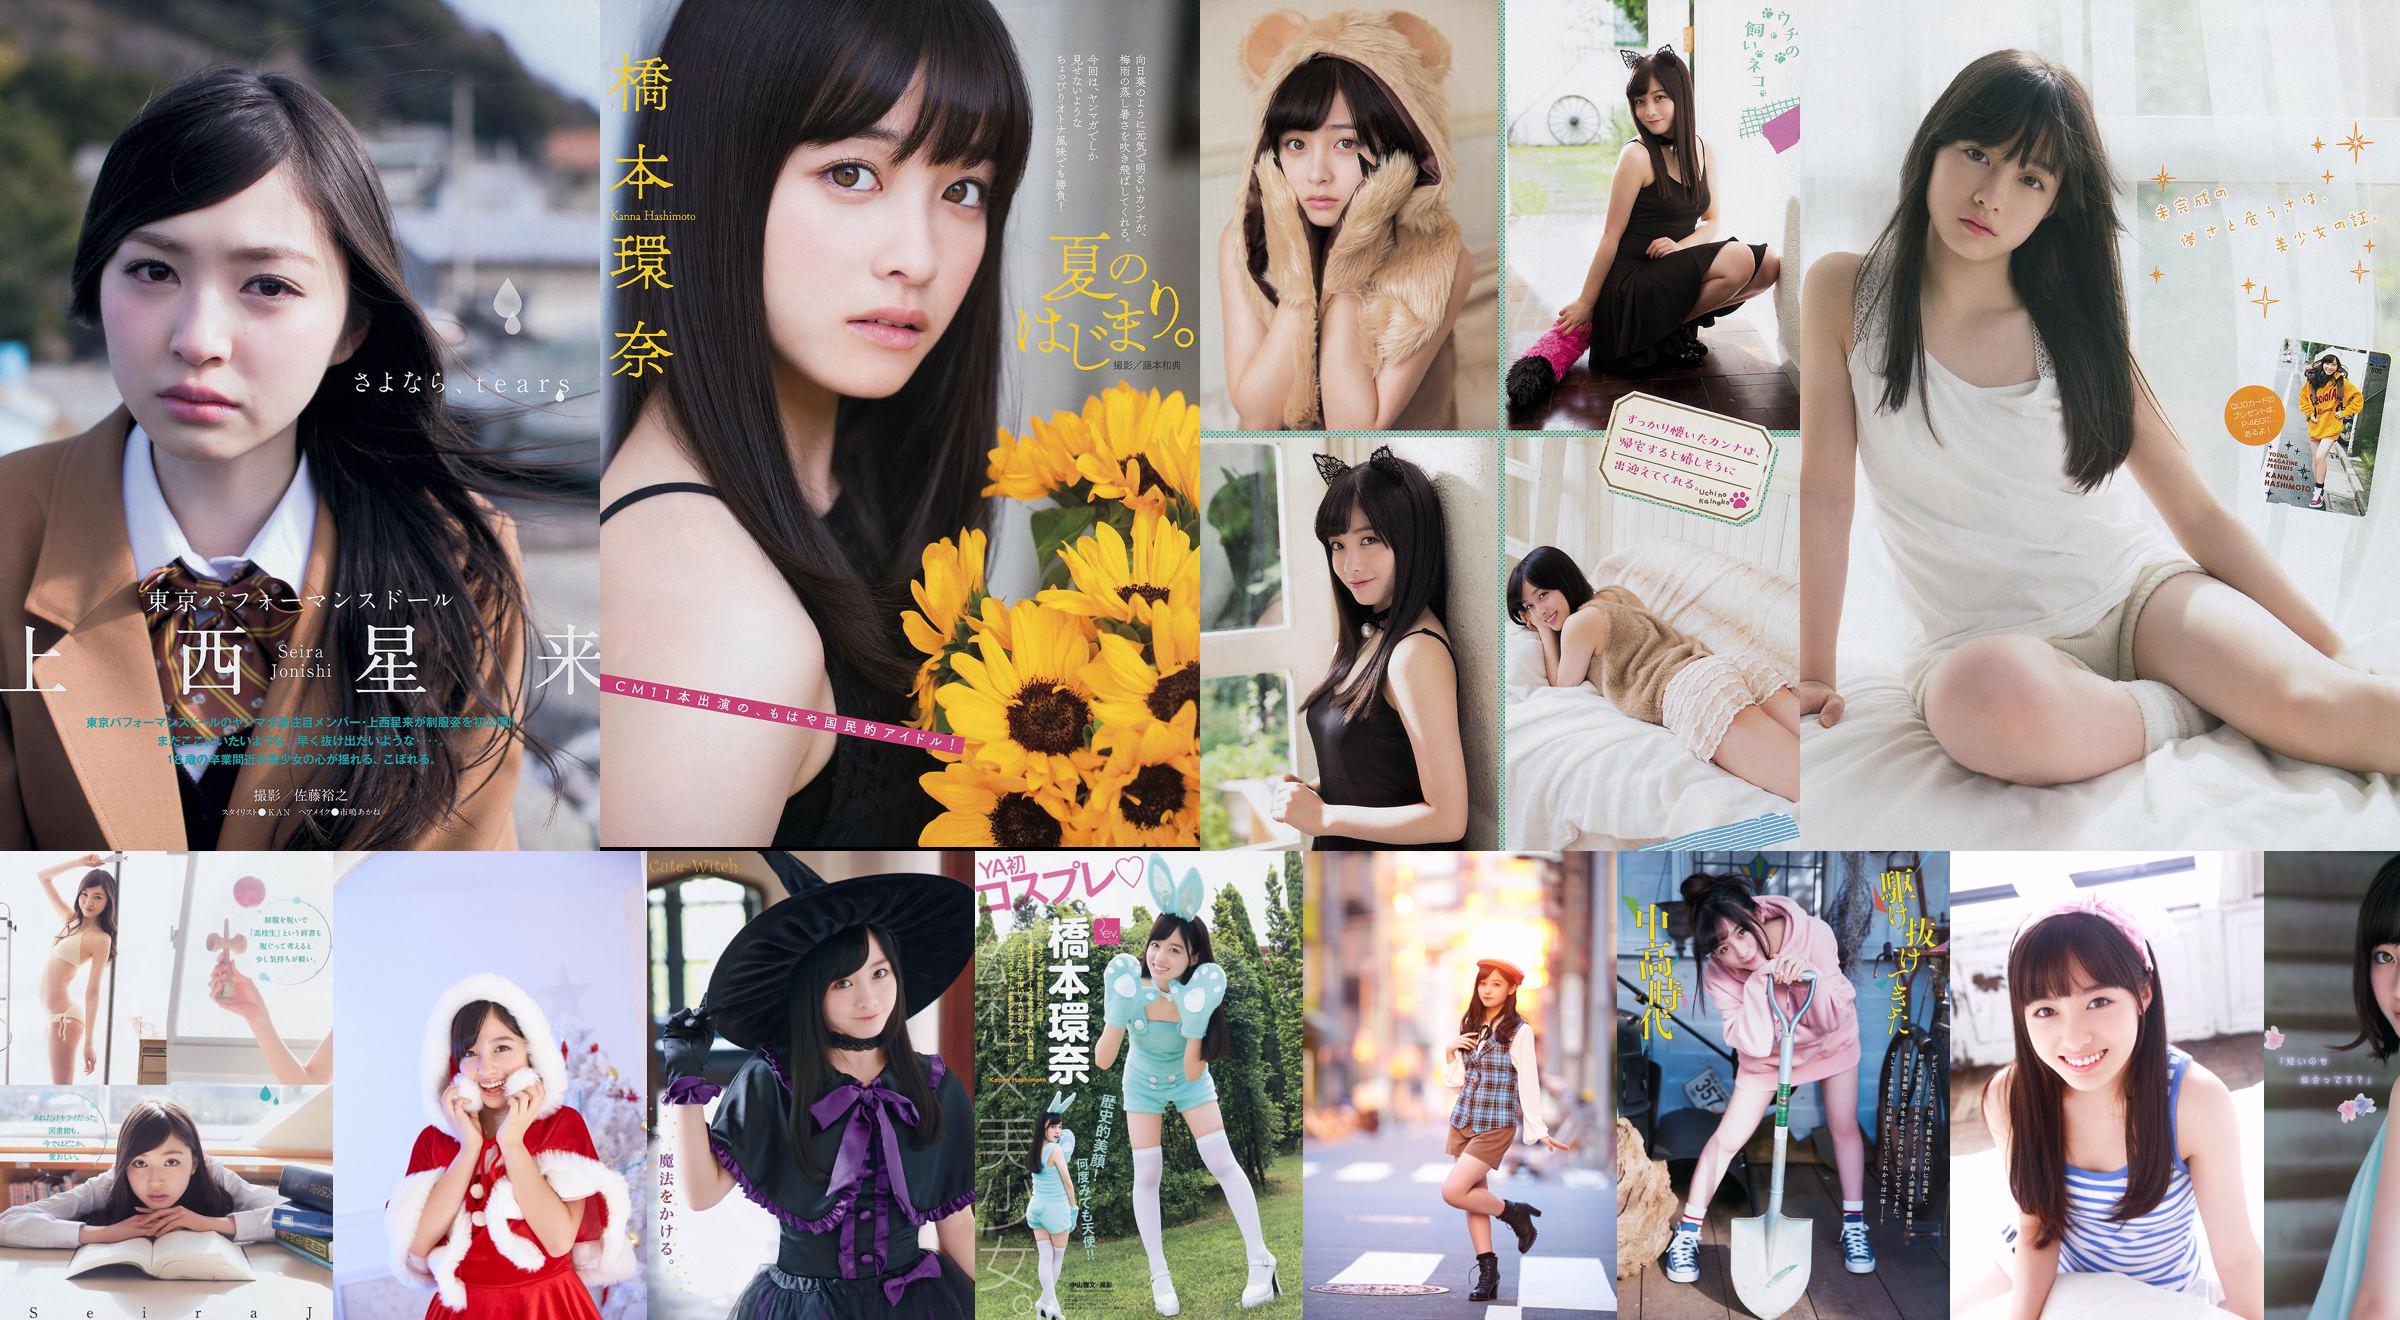 [Young Magazine] Канна Хашимото СКАНДАЛ Tokyo Girls 'Style 2015 № 01 Фотография No.f3faed Страница 1